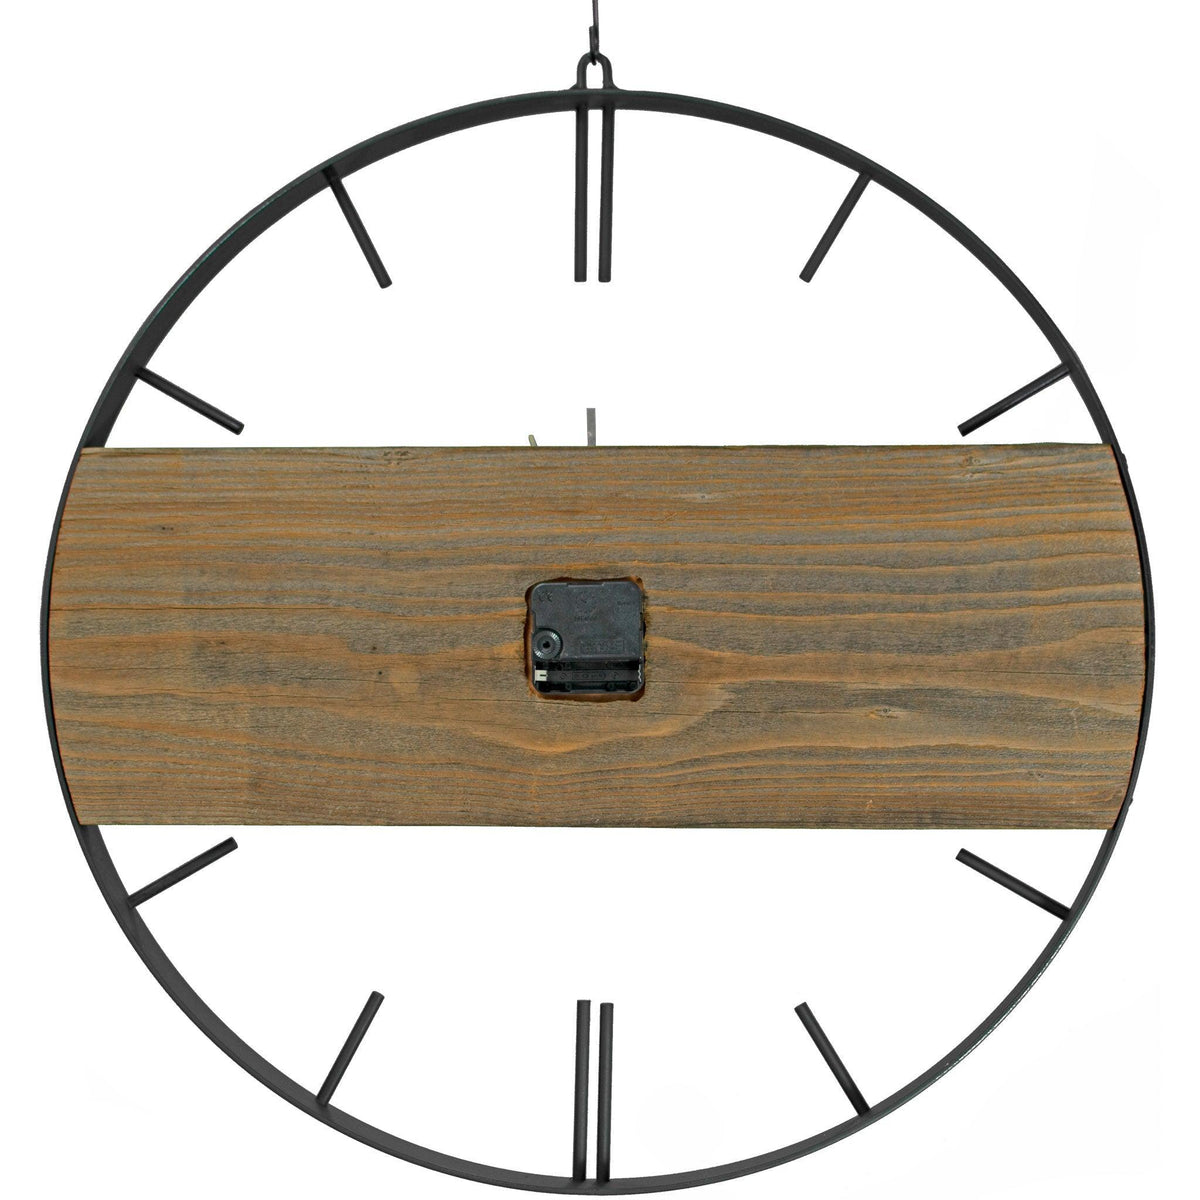 Introducing Lee Display's brand new Panchali Wall Clock with Live Edge Redwood Slab on sale at leedisplay.com